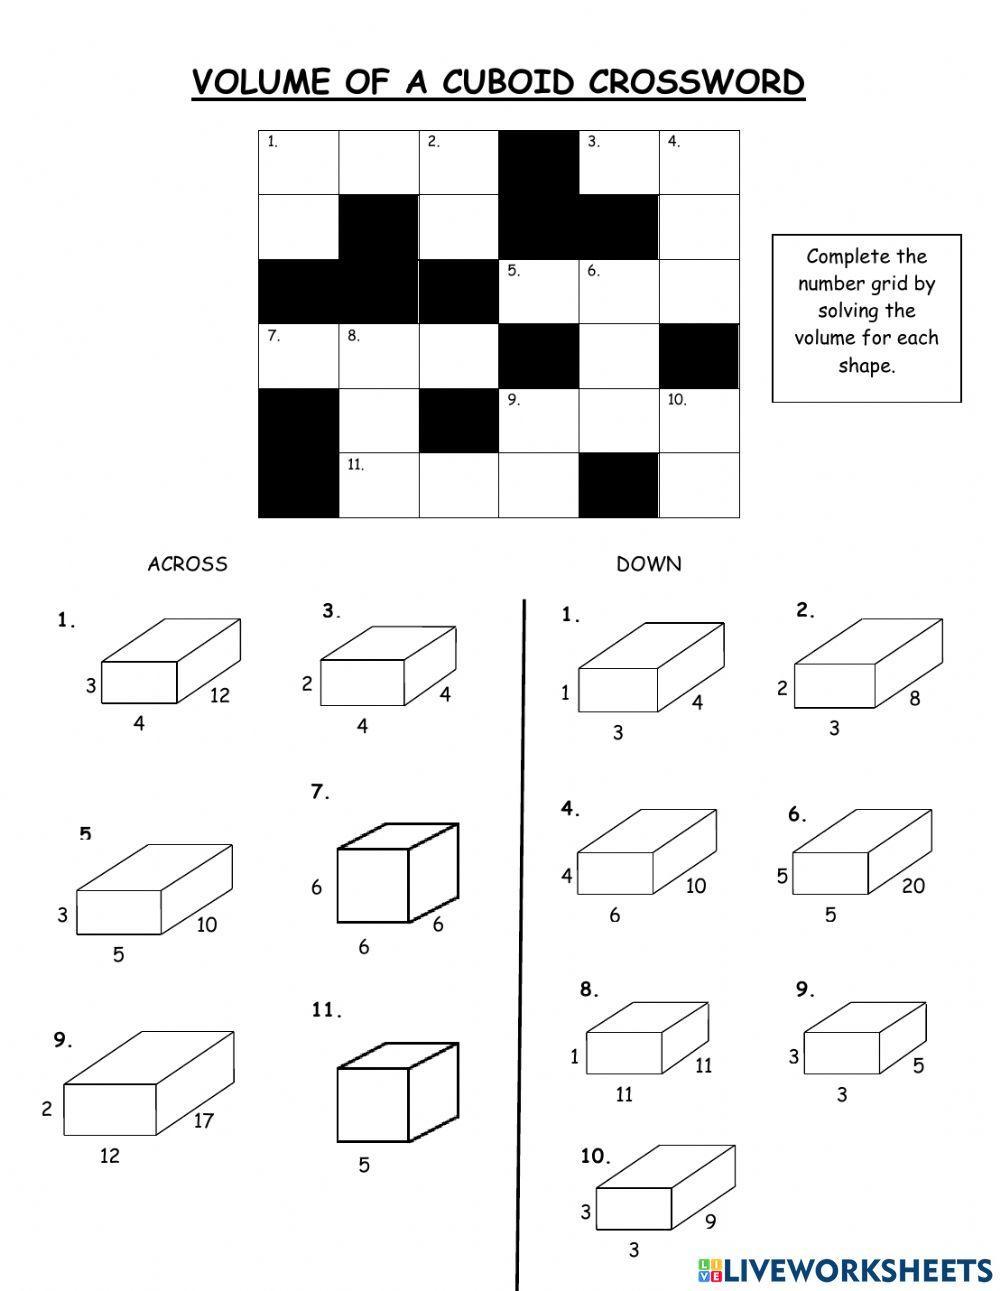 Volume of Cuboid Crossword